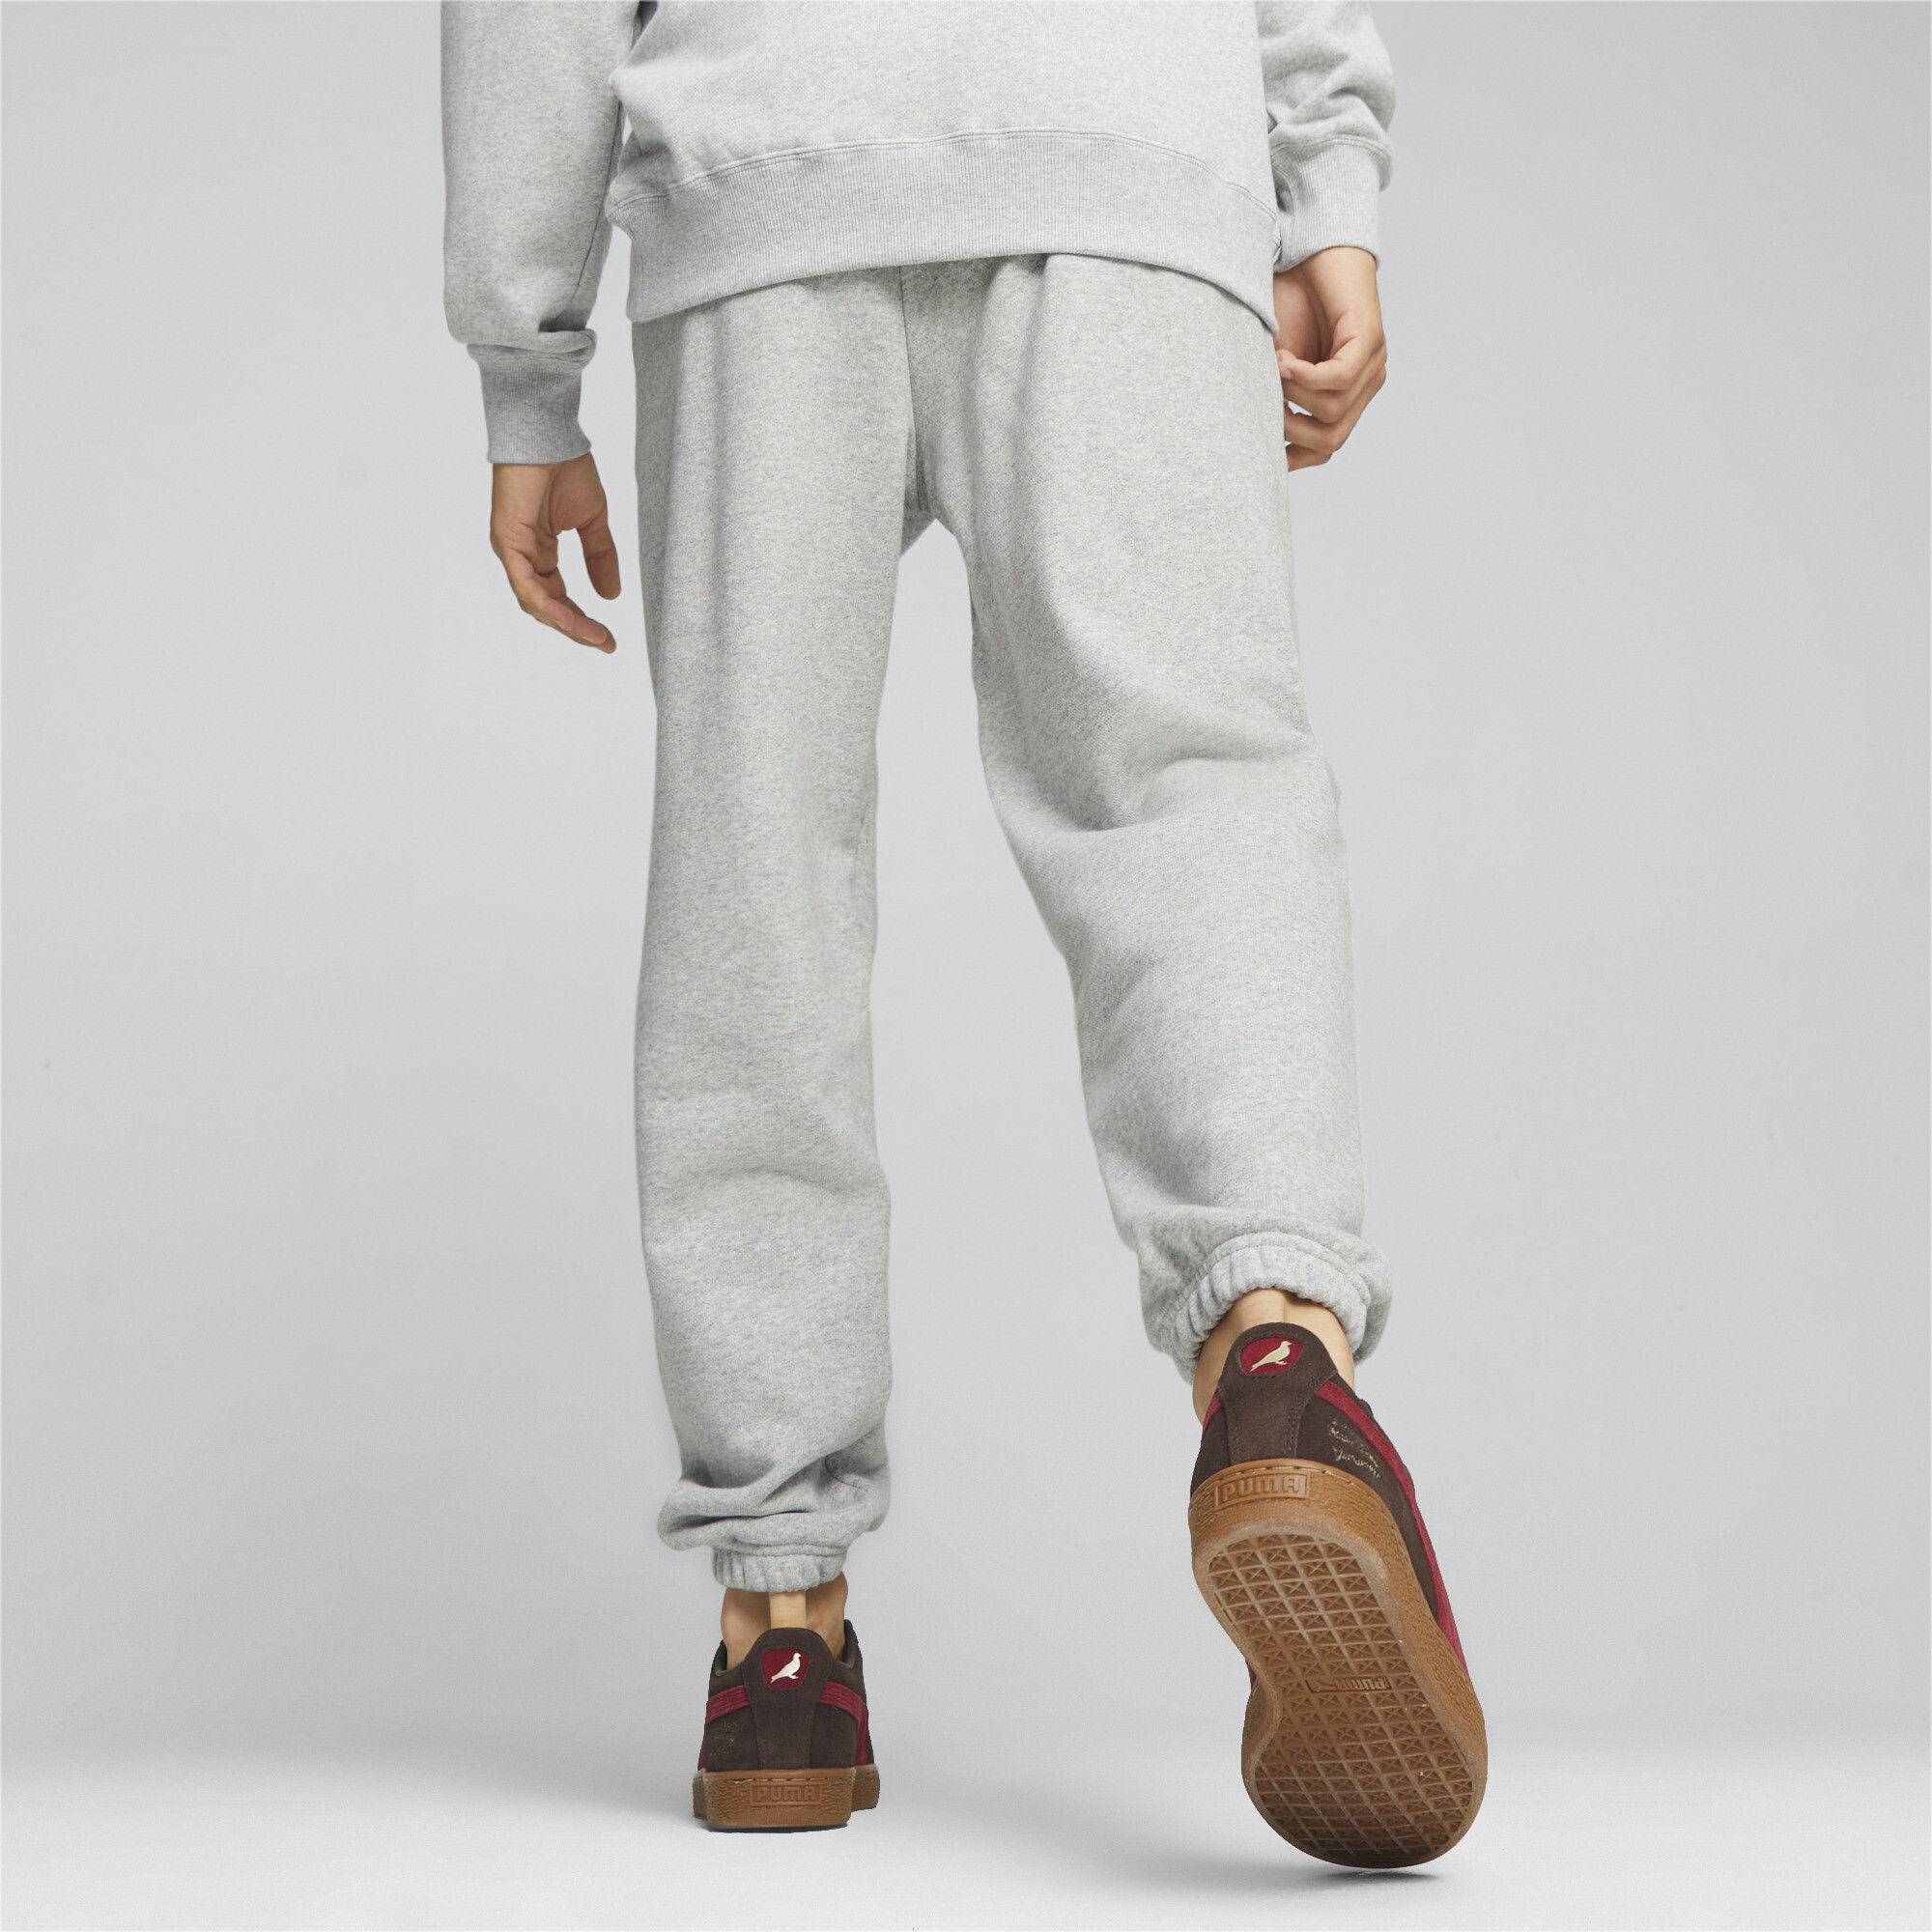 Men's Puma X STAPLE's Sweatpants, Gray, Size M, Clothing